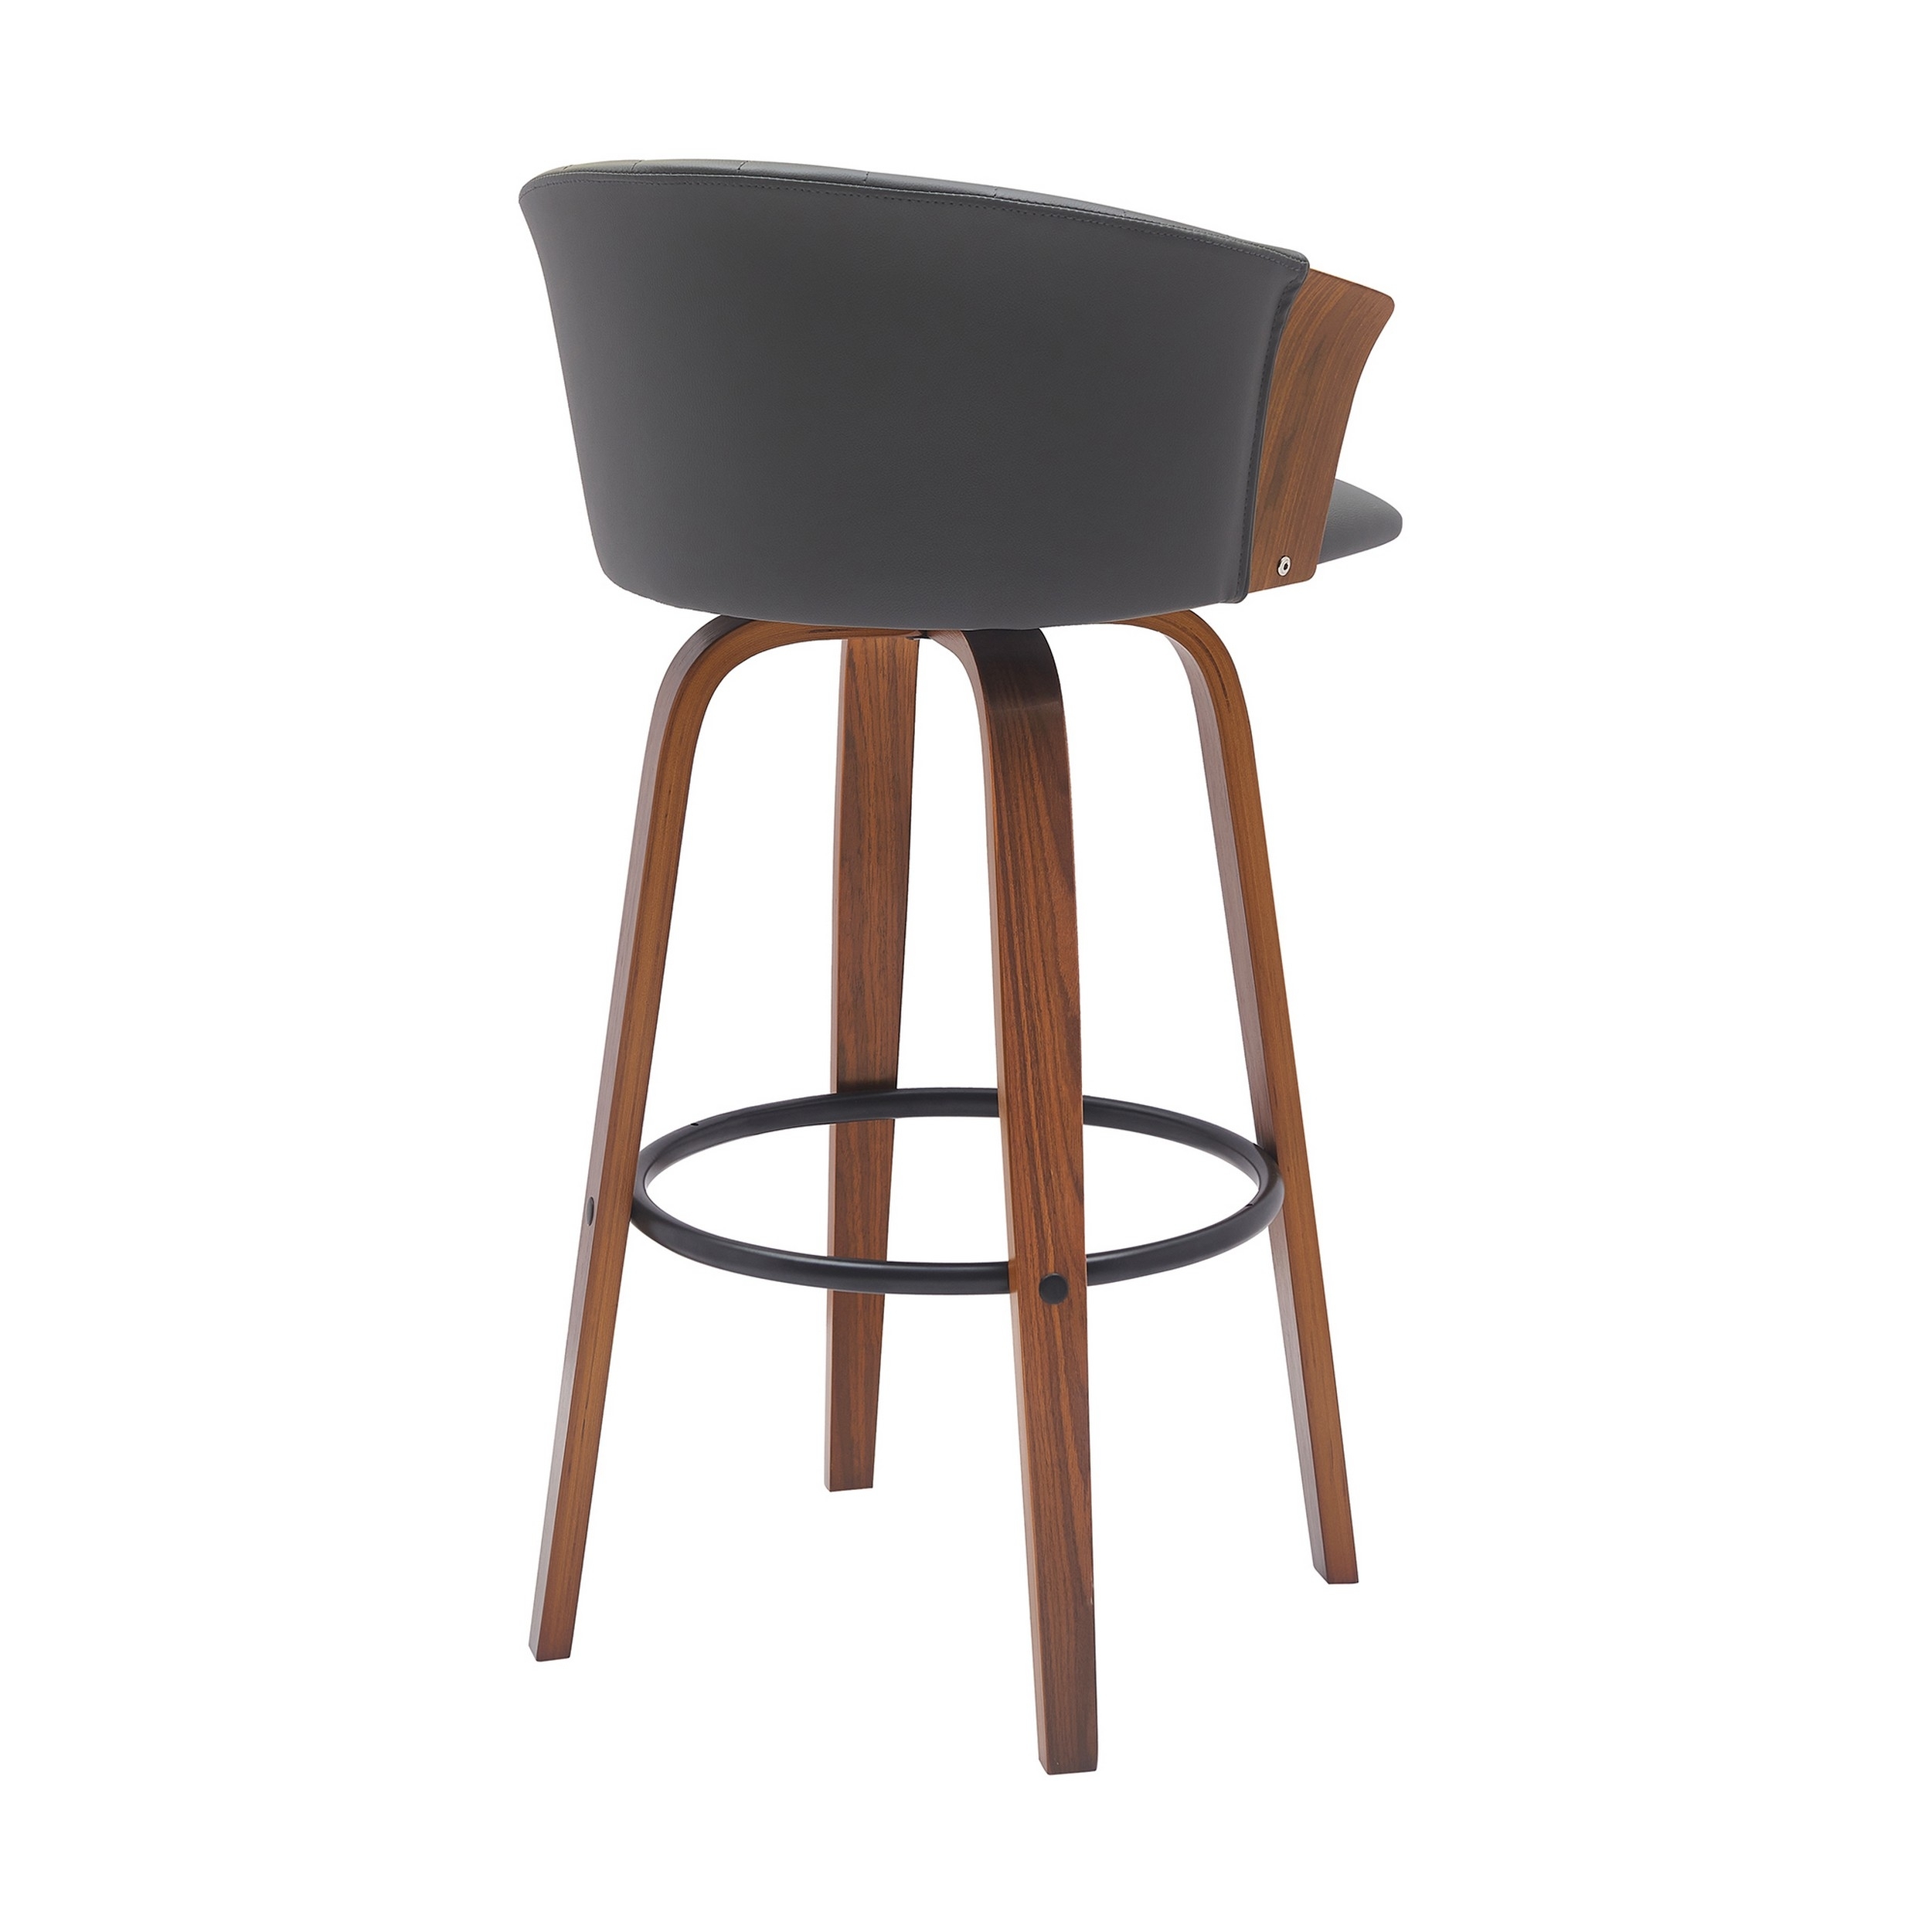 Oja 30 Inch Swivel Barstool Chair, Gray Faux Leather, Curved, Walnut Brown - Saltoro Sherpi